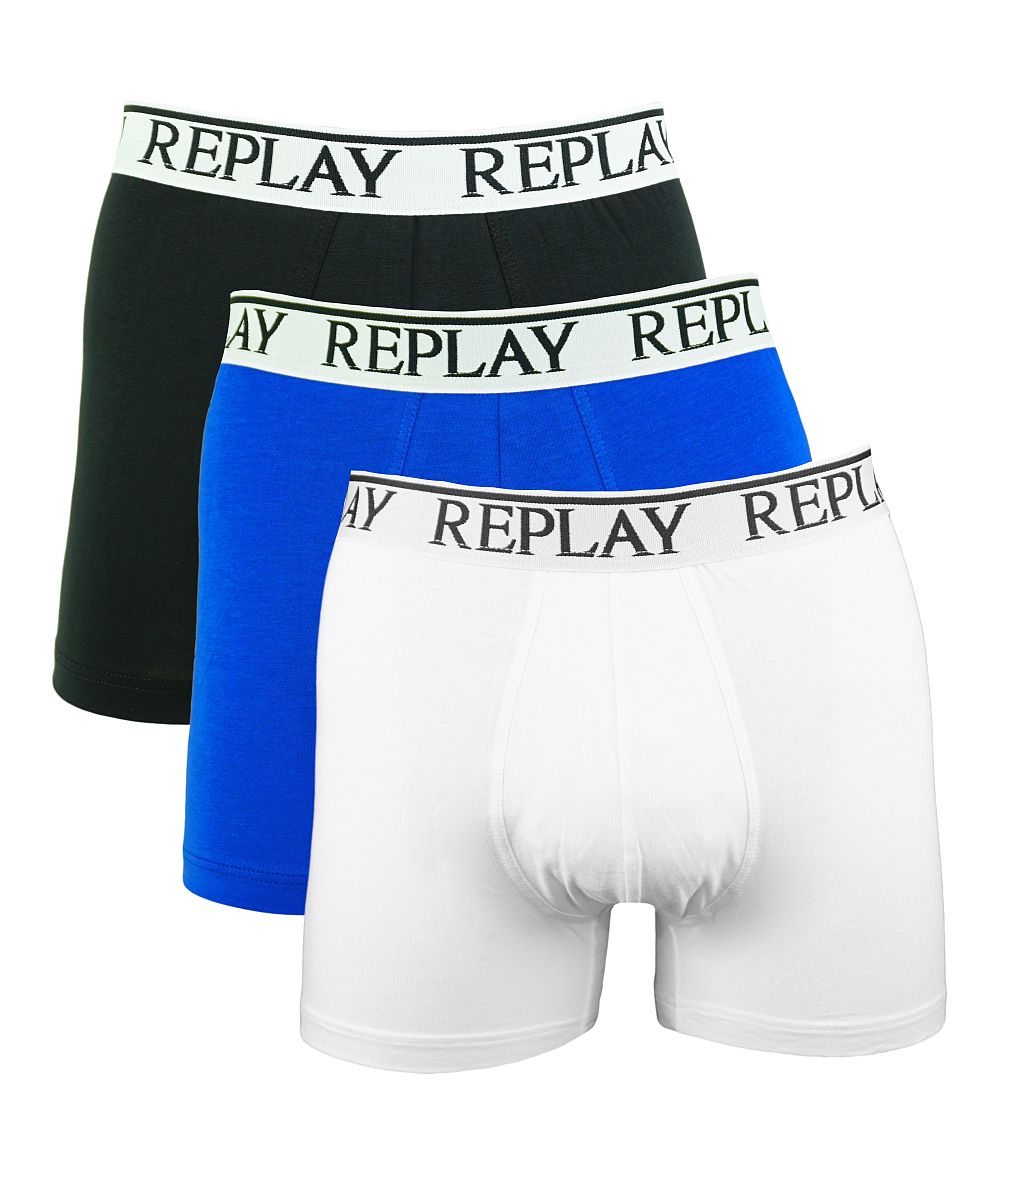 Replay 3er Pack Shorts Boxershorts M605001 E55 schwarz, blau, weiss W18-RY1